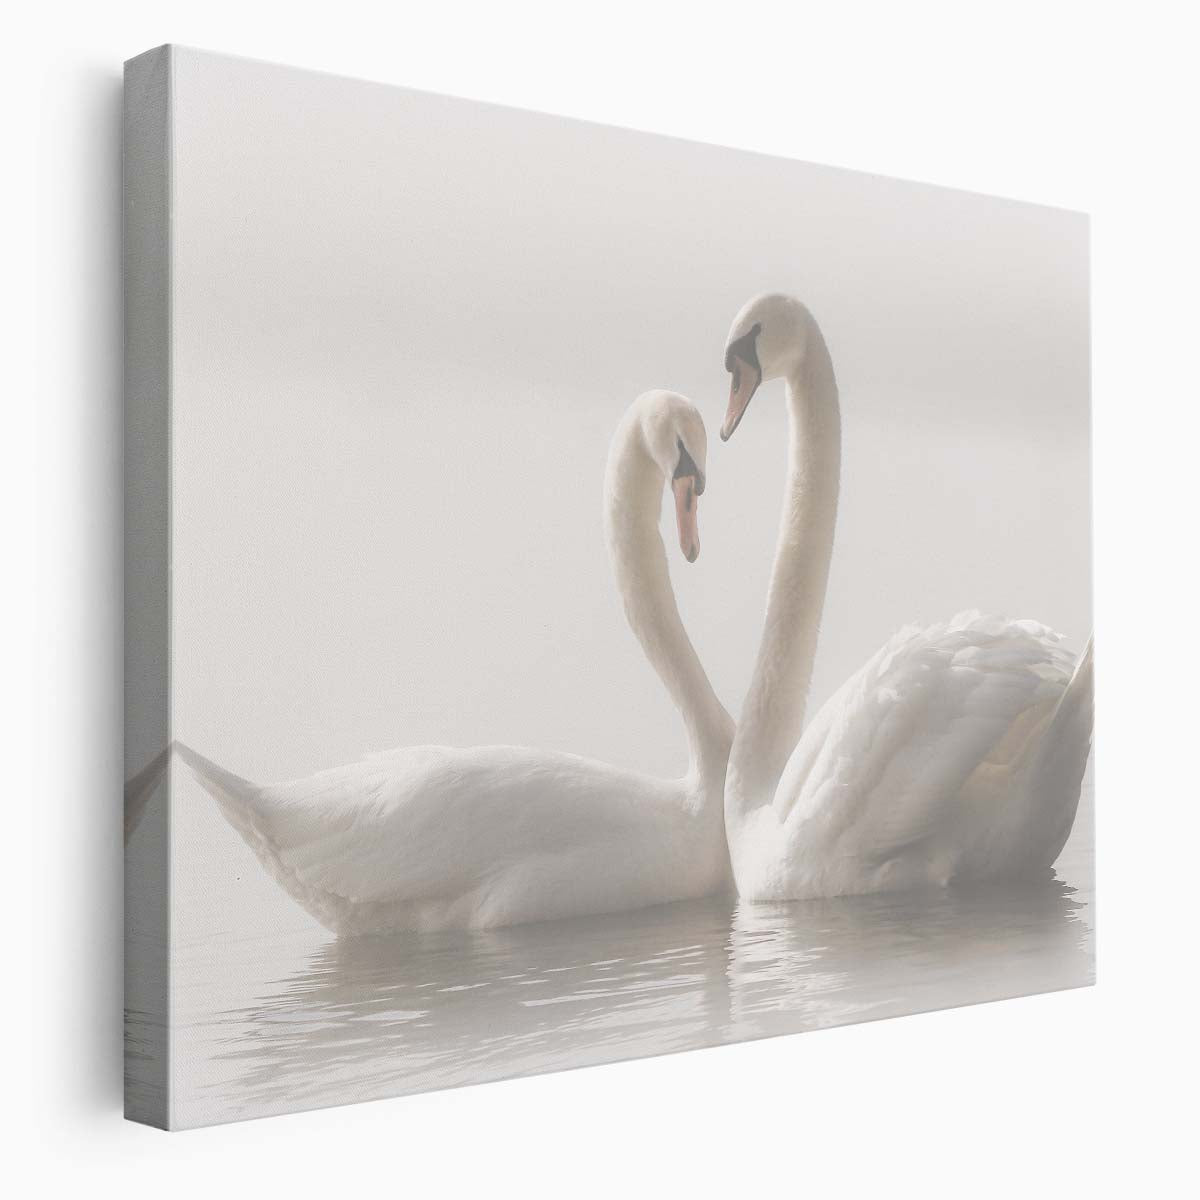 Romantic Misty Swan Couple in Tranquil German Waters Wall Art